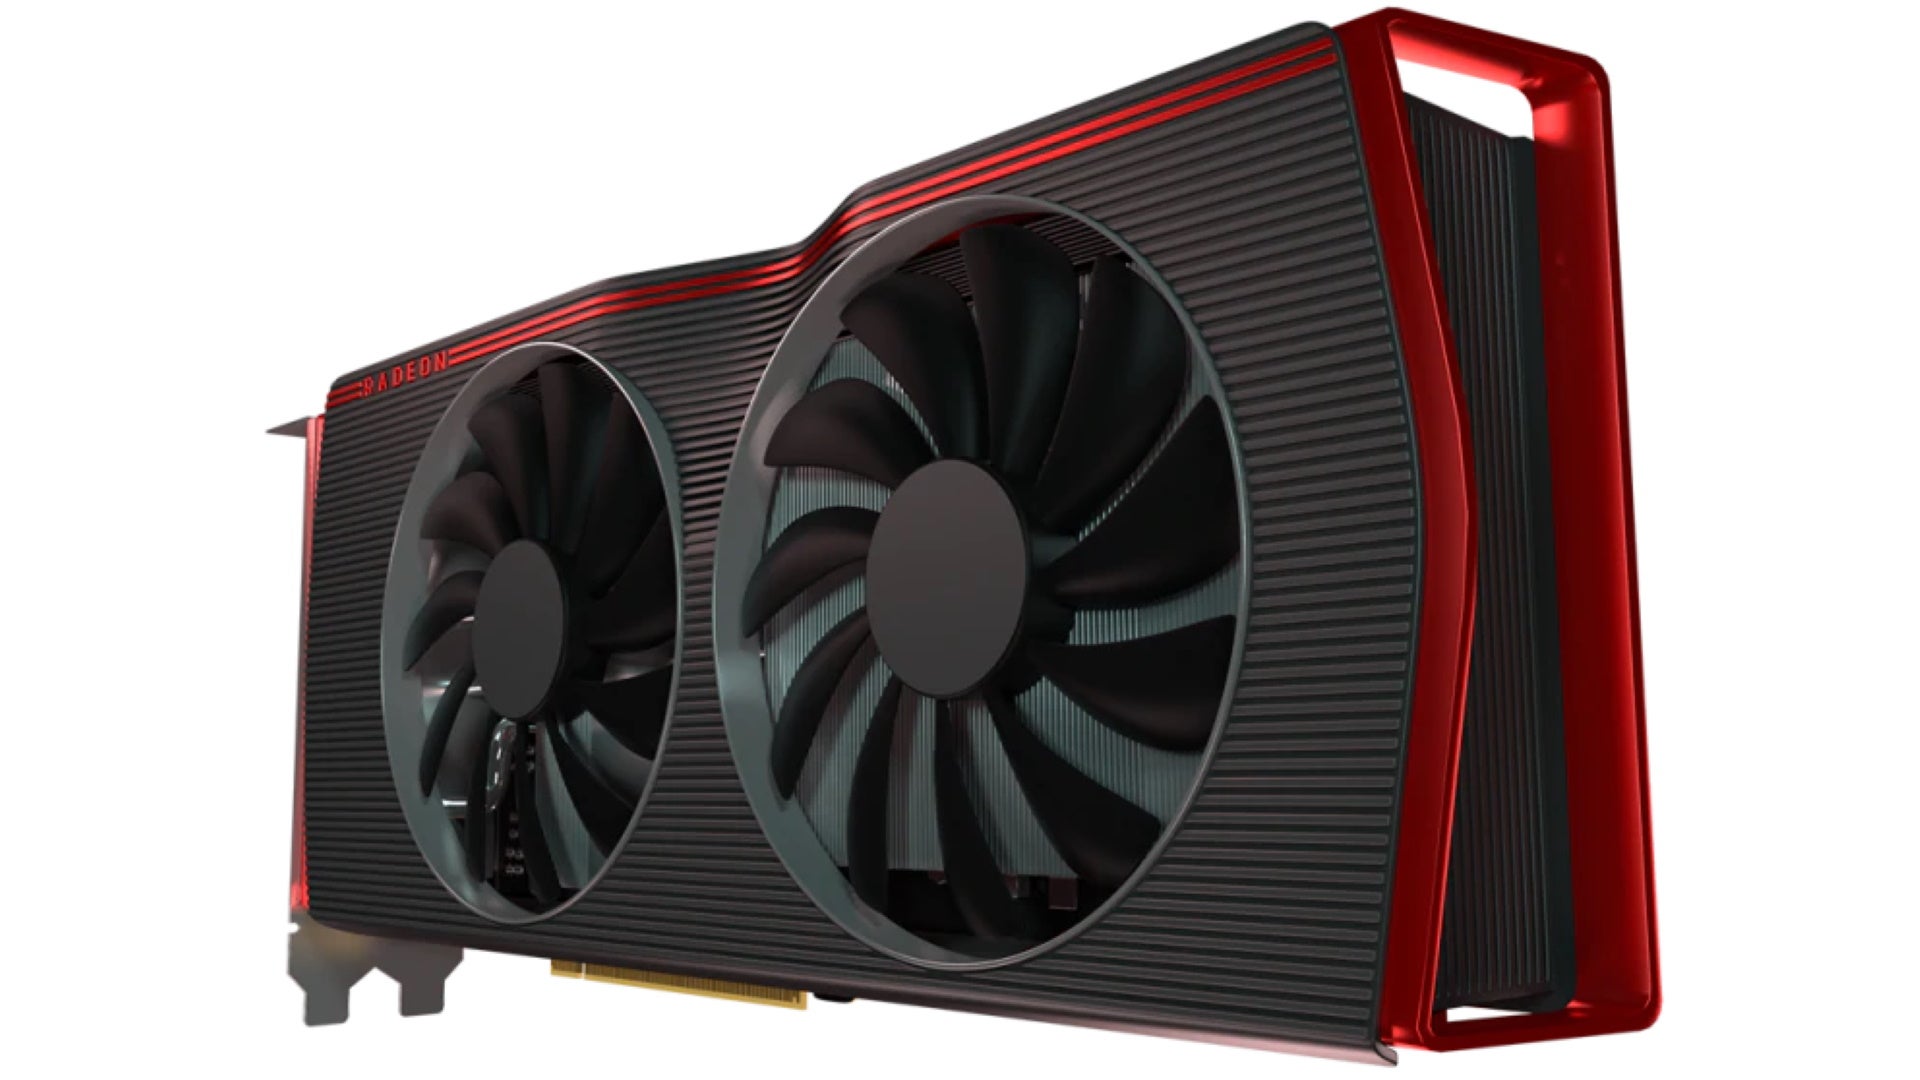 Image for AMD's Radeon RX 5600 XT takes aim at Nvidia's GTX 1660 Ti